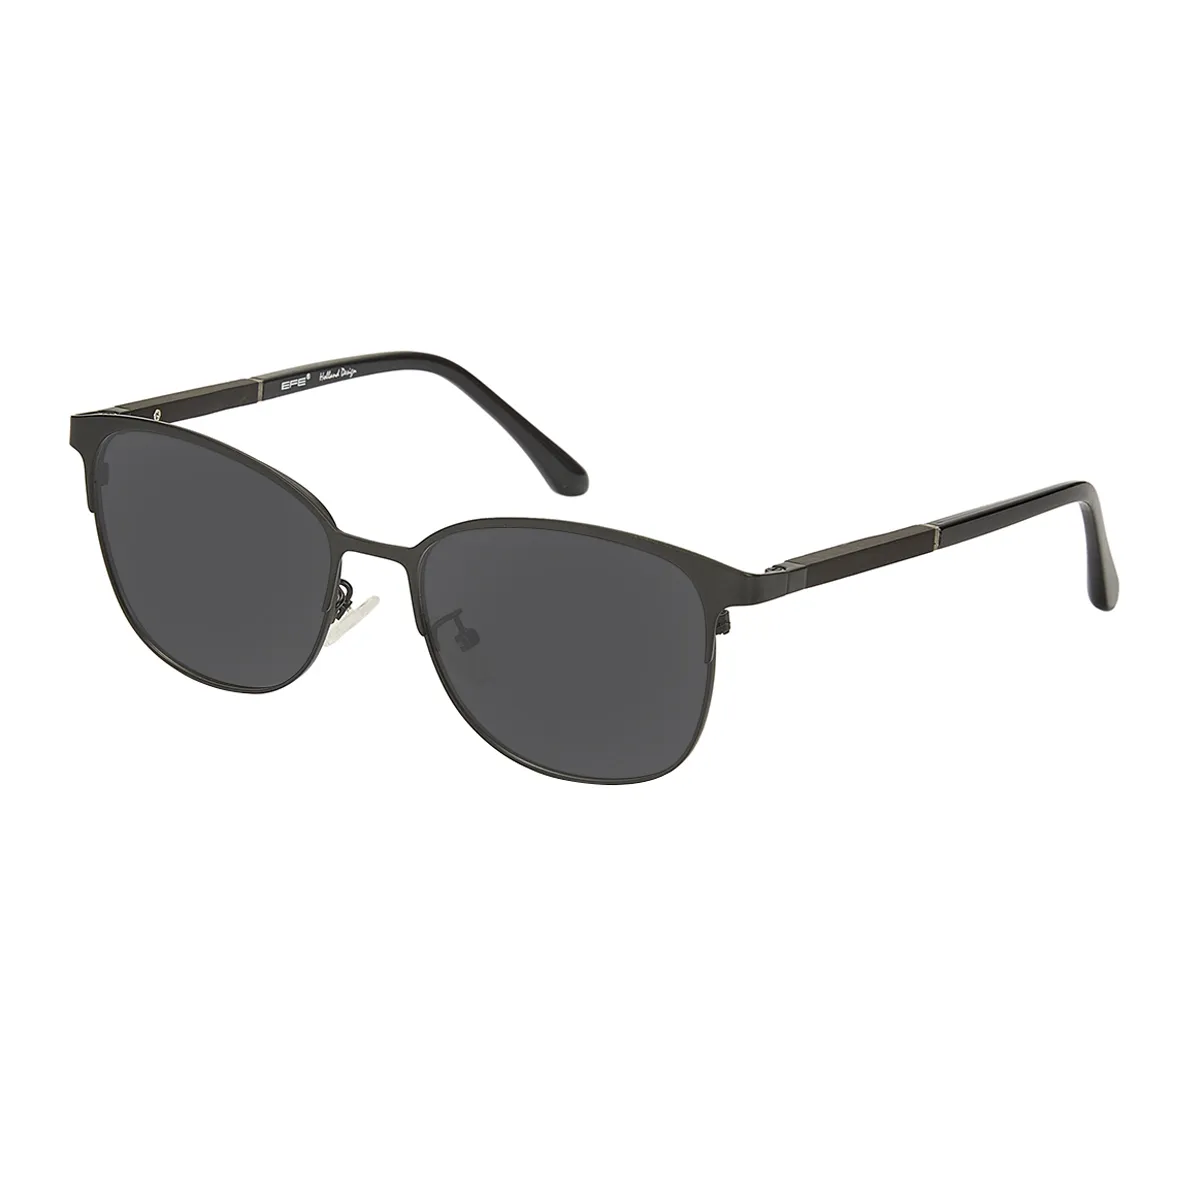 Craig - Browline Black Sunglasses for Men